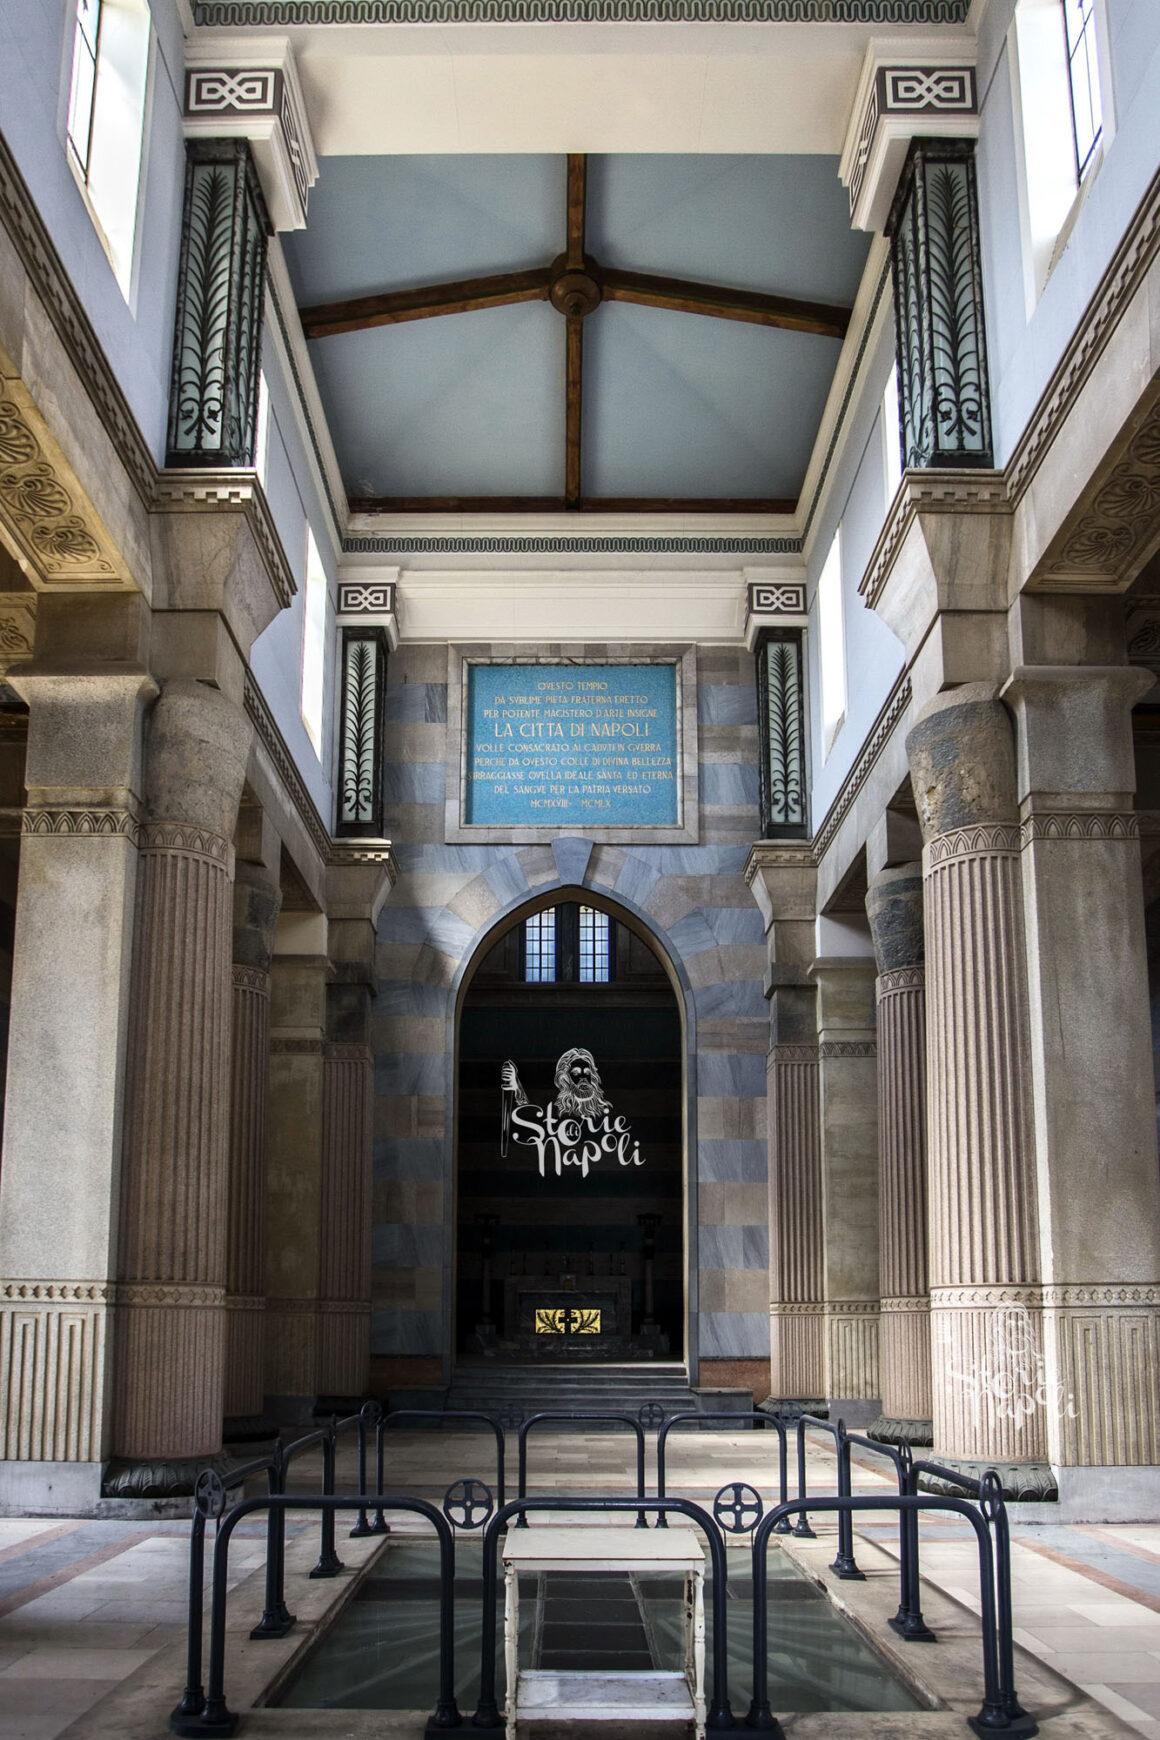 Inside of the Mausoleum of Posillipo